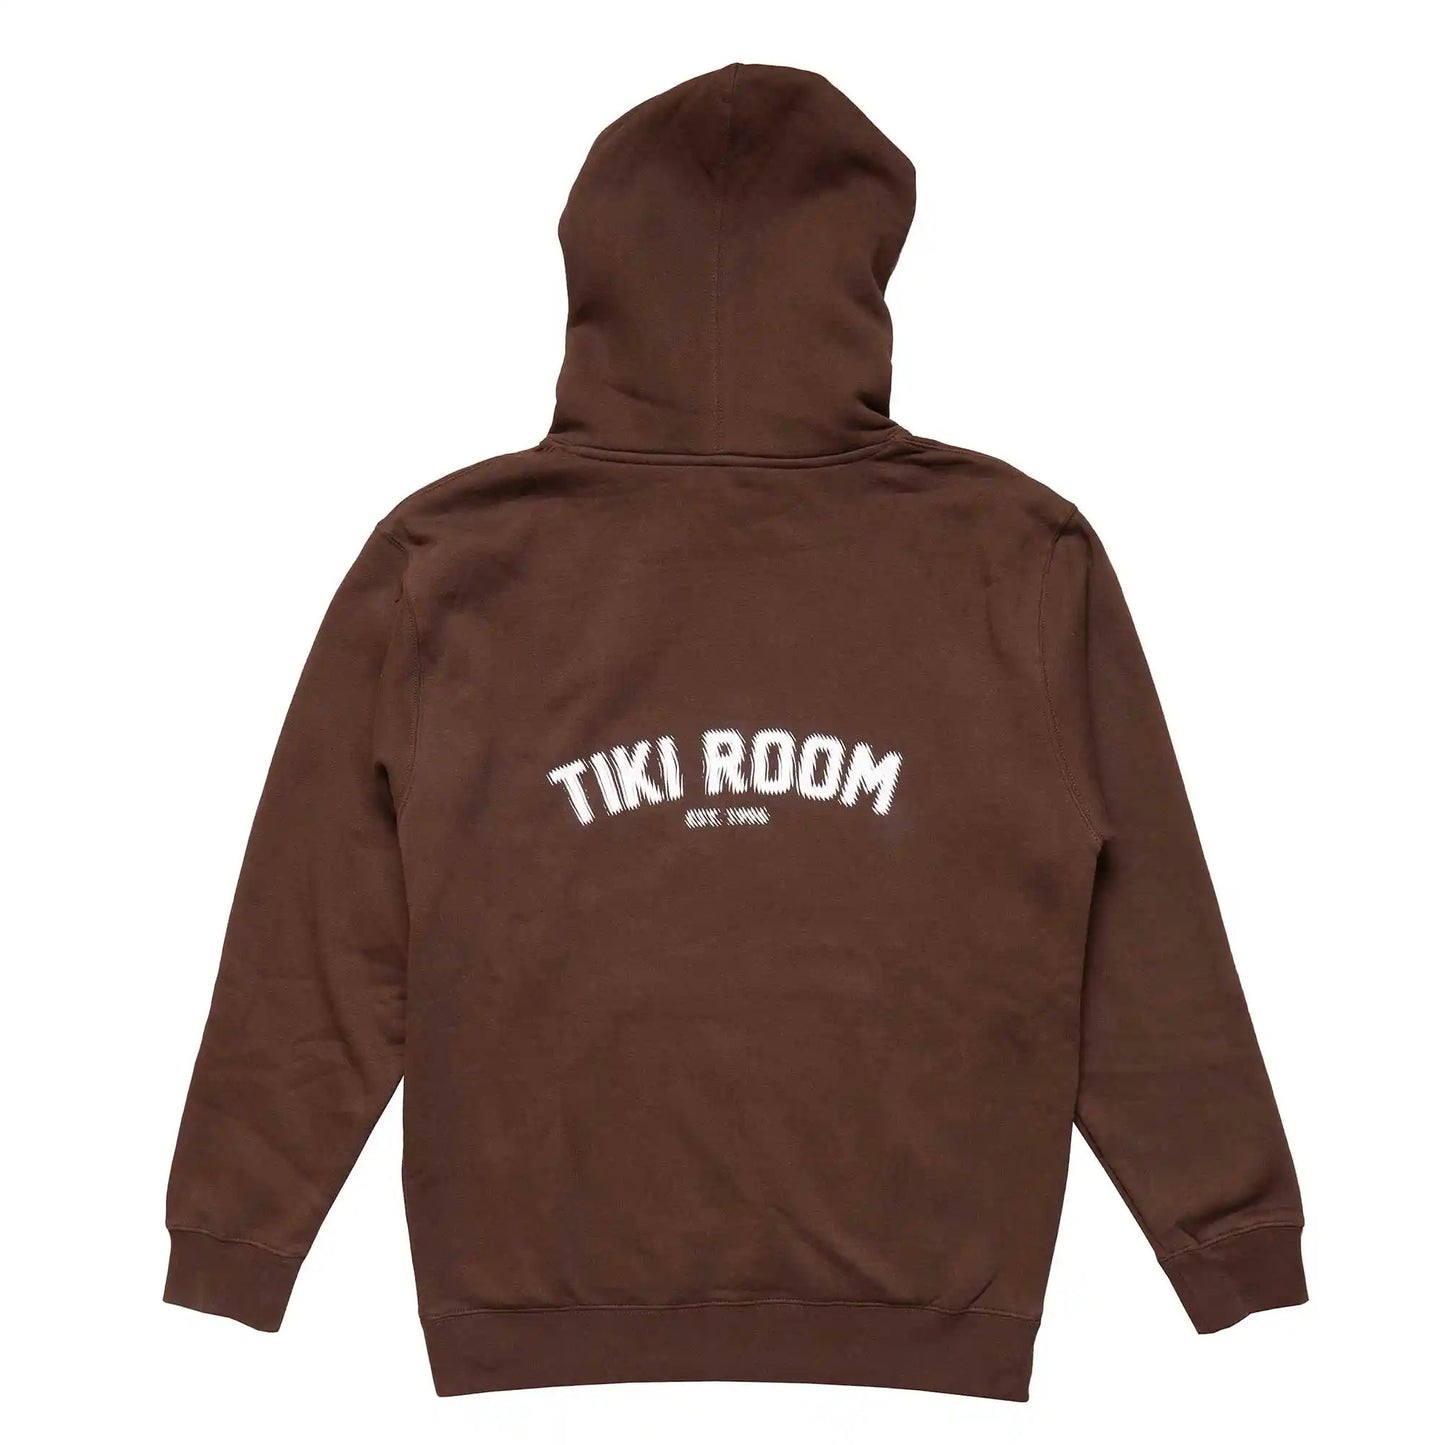 Tiki Room Halftone Arch Hoodie, brown - Tiki Room Skateboards - 3